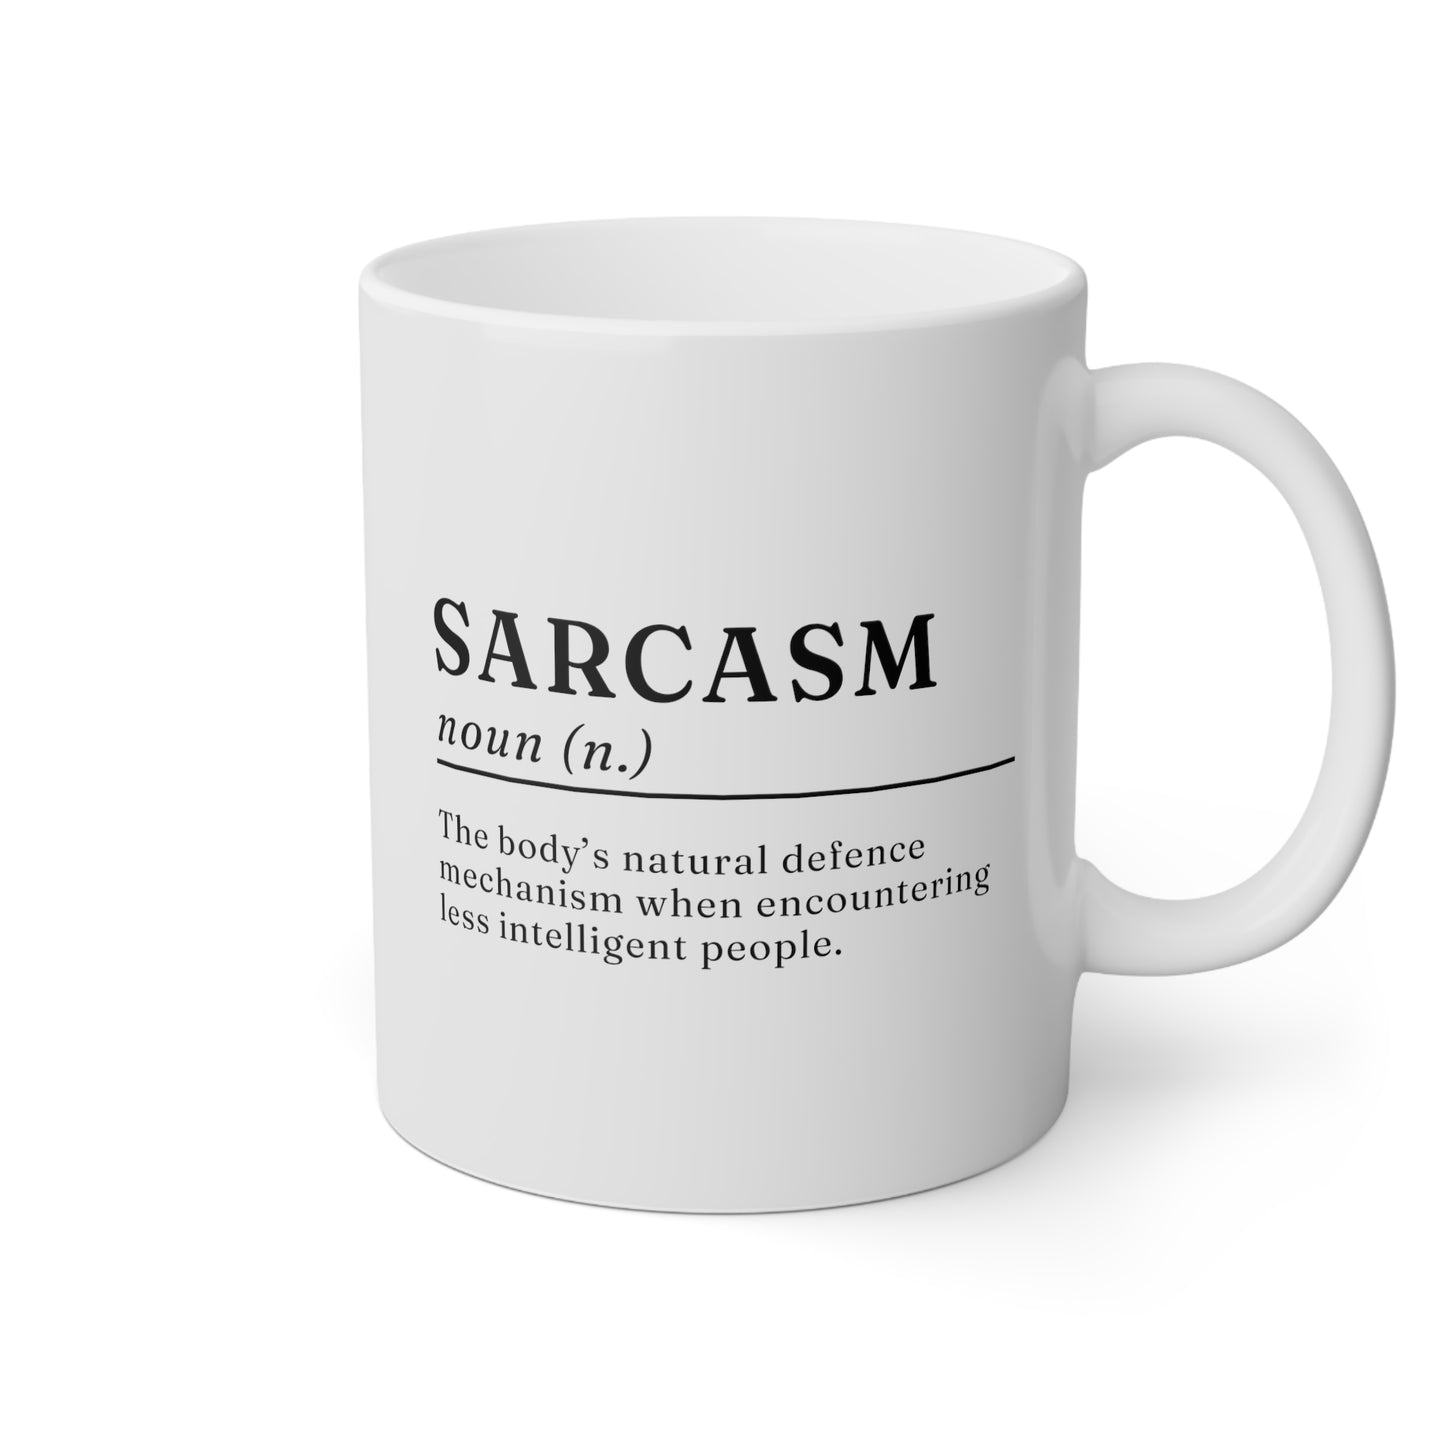 Sarcasm Definition 11oz white funny large coffee mug gift for friend dictionary novelty joke sarcastic sassy snarky meaning waveywares wavey wares wavywares wavy wares